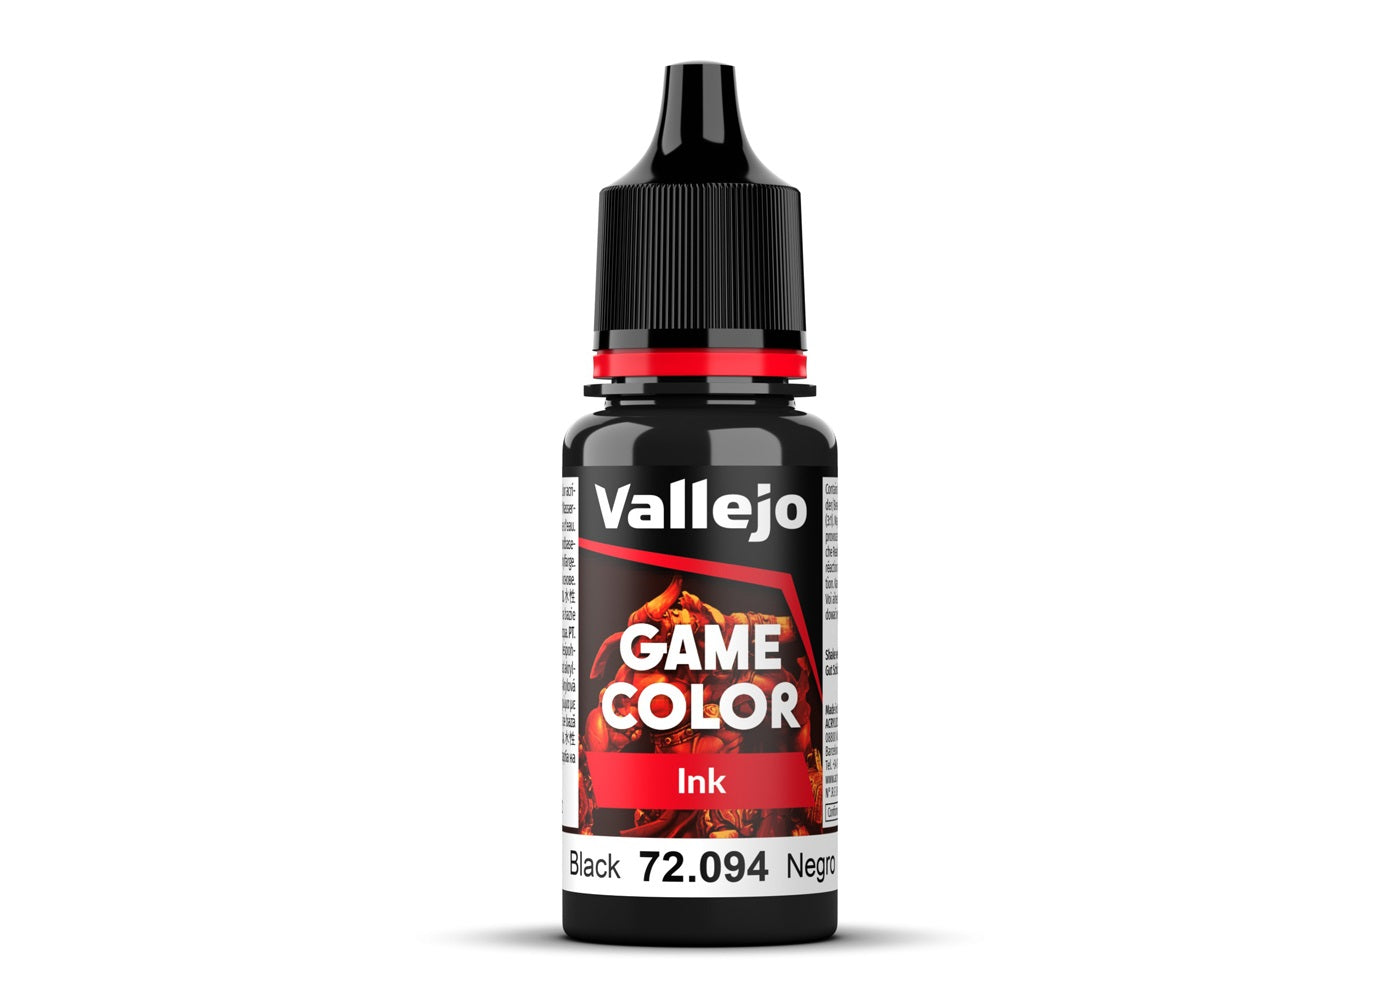 Vallejo Game Color Ink Black - 18ml